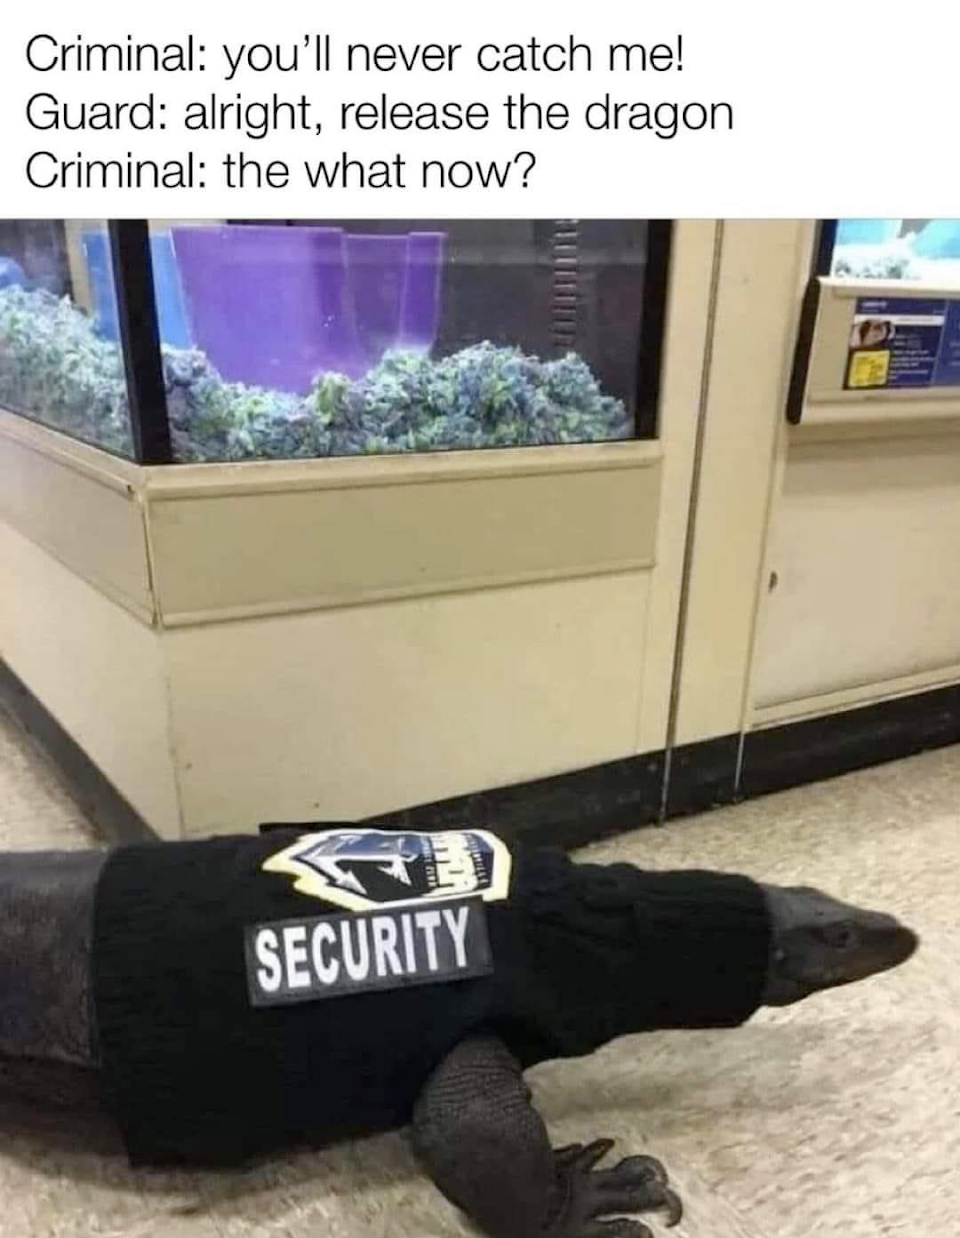 Top notch security